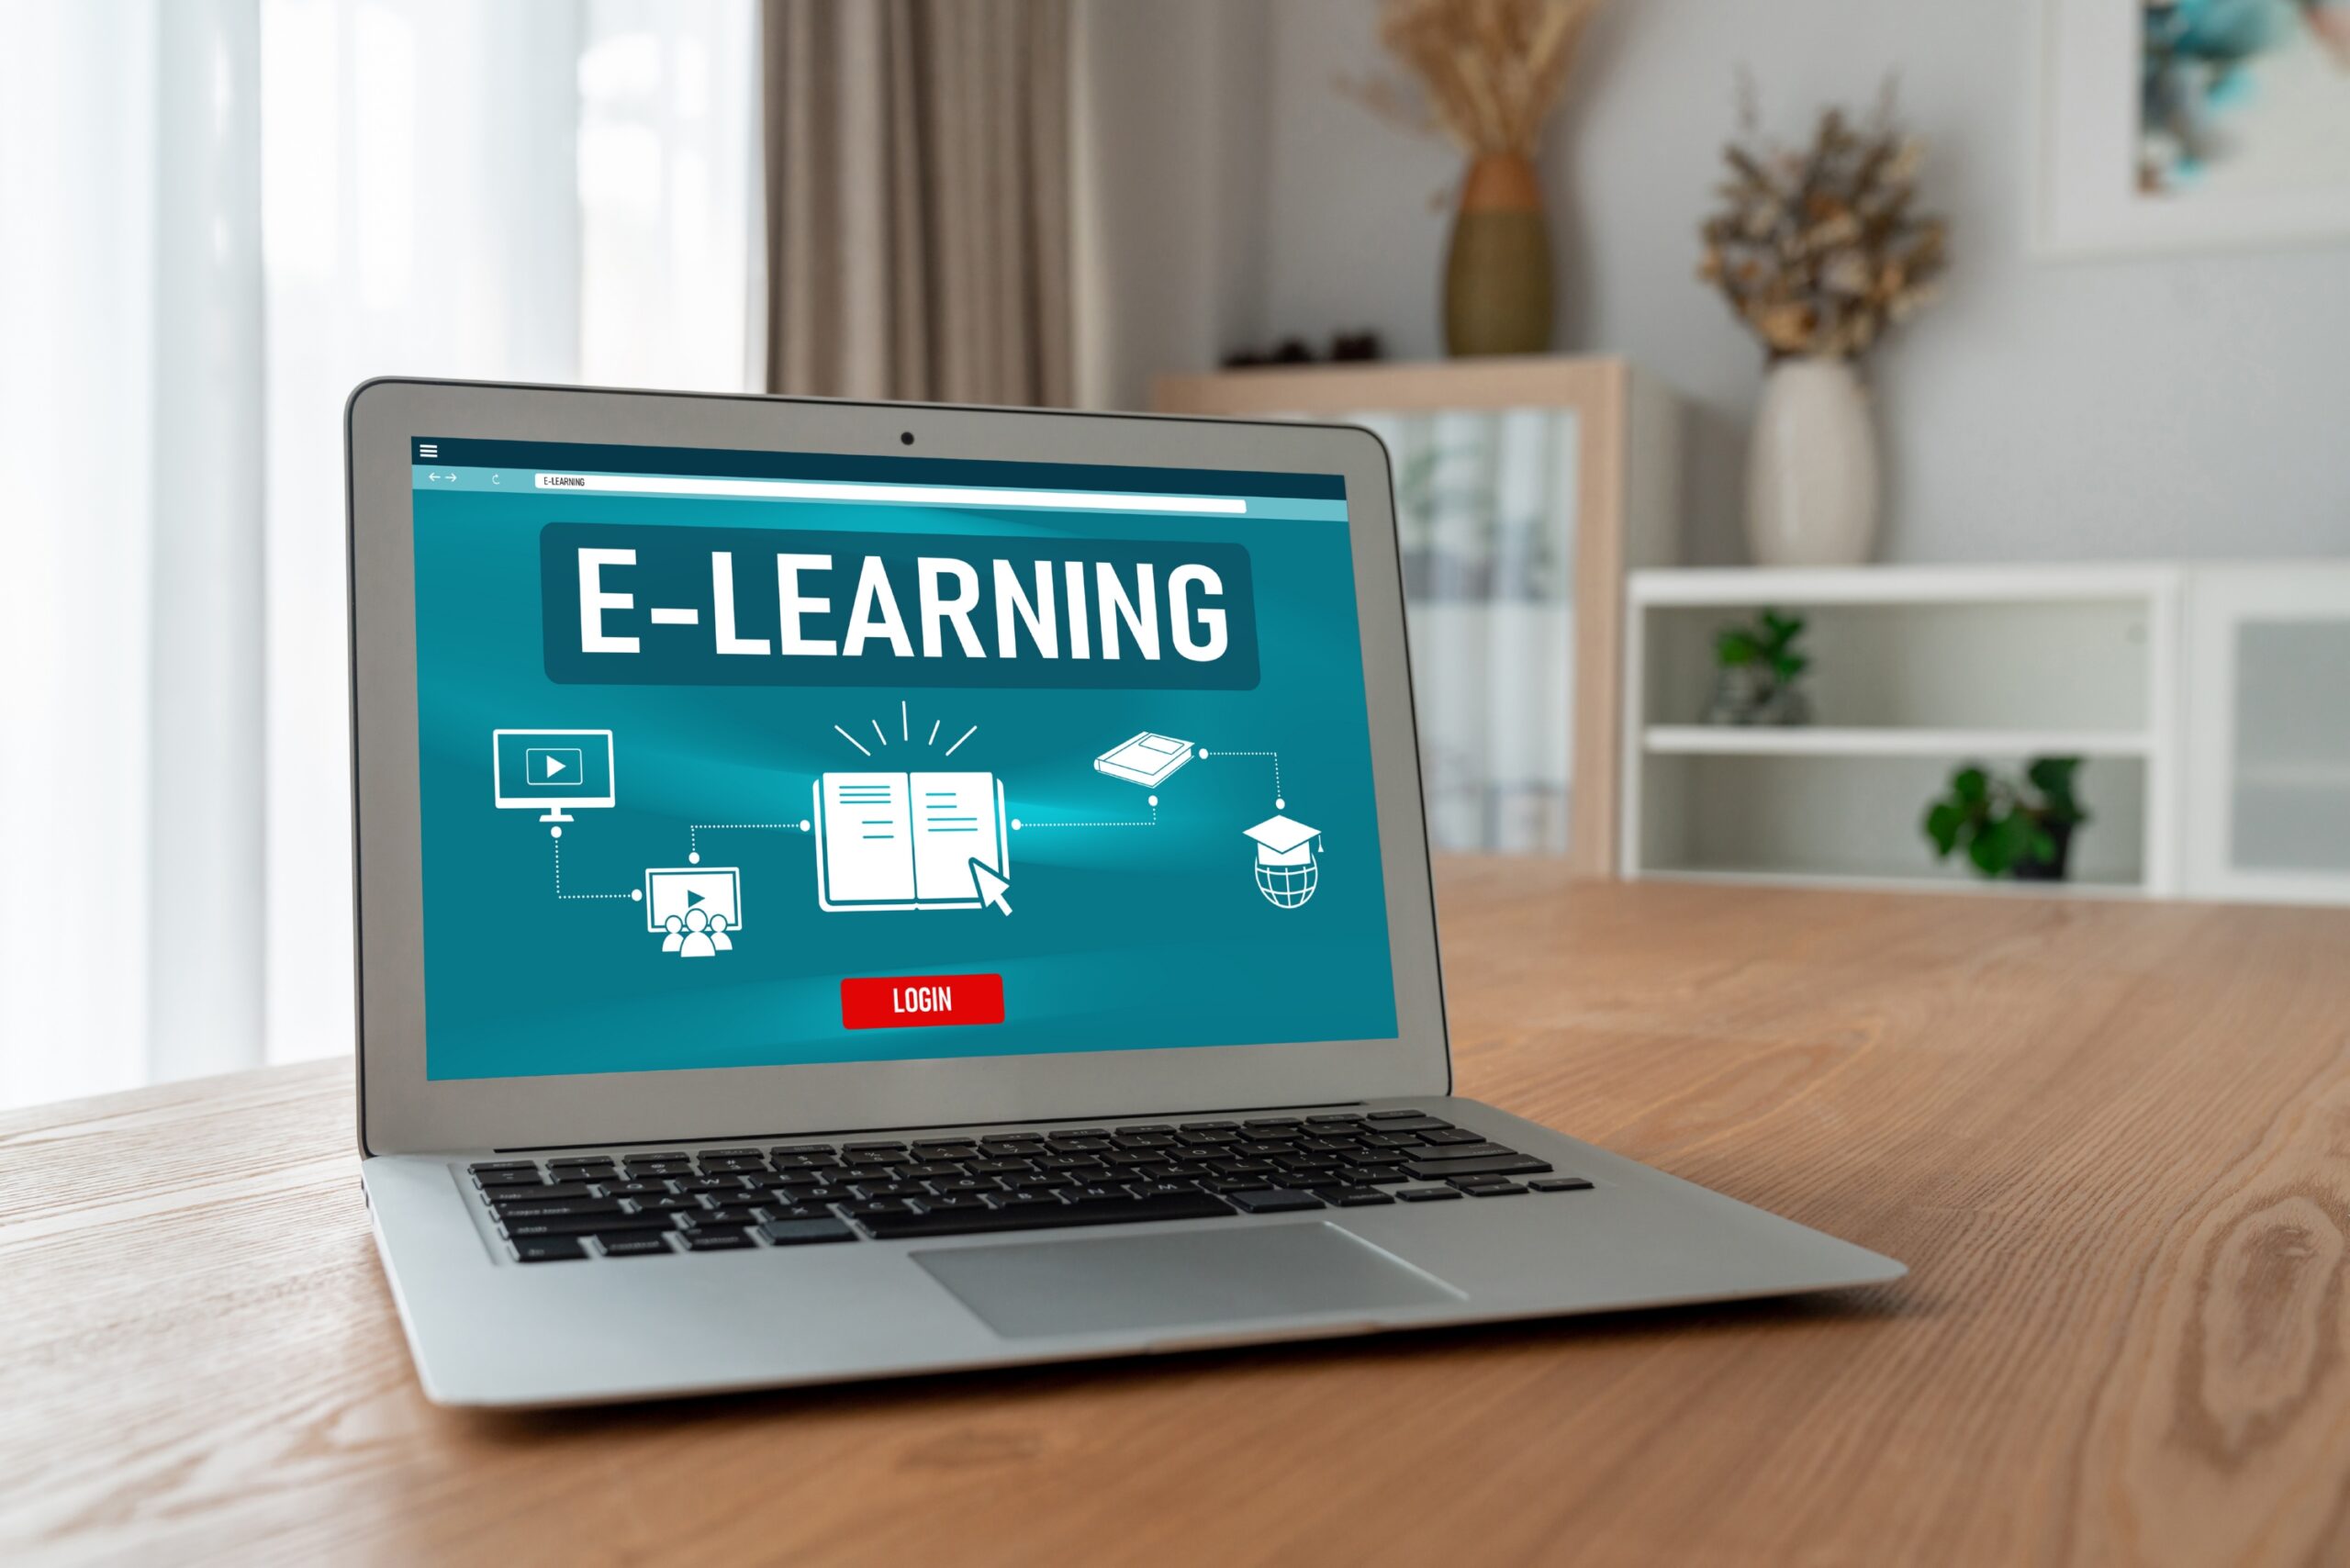 Platefomre d'e-learning avec vos cours eXcent Training